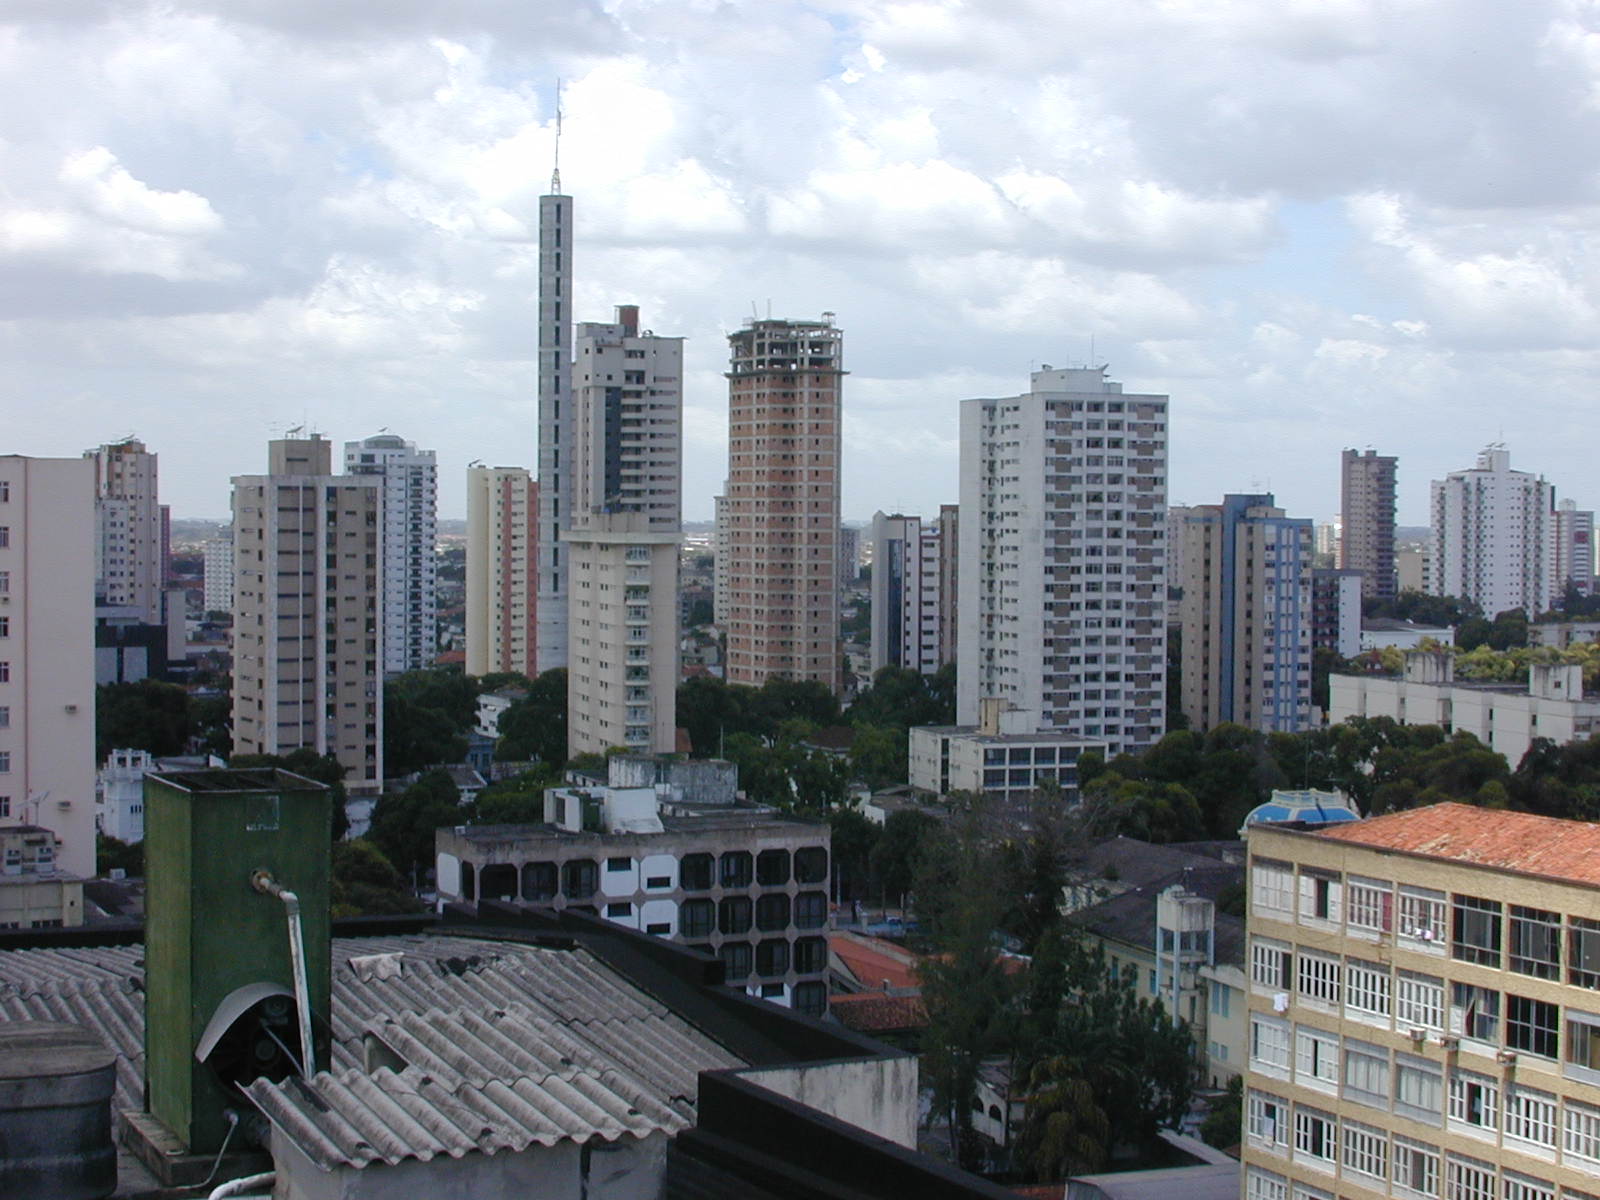 the city has many tall buildings near by